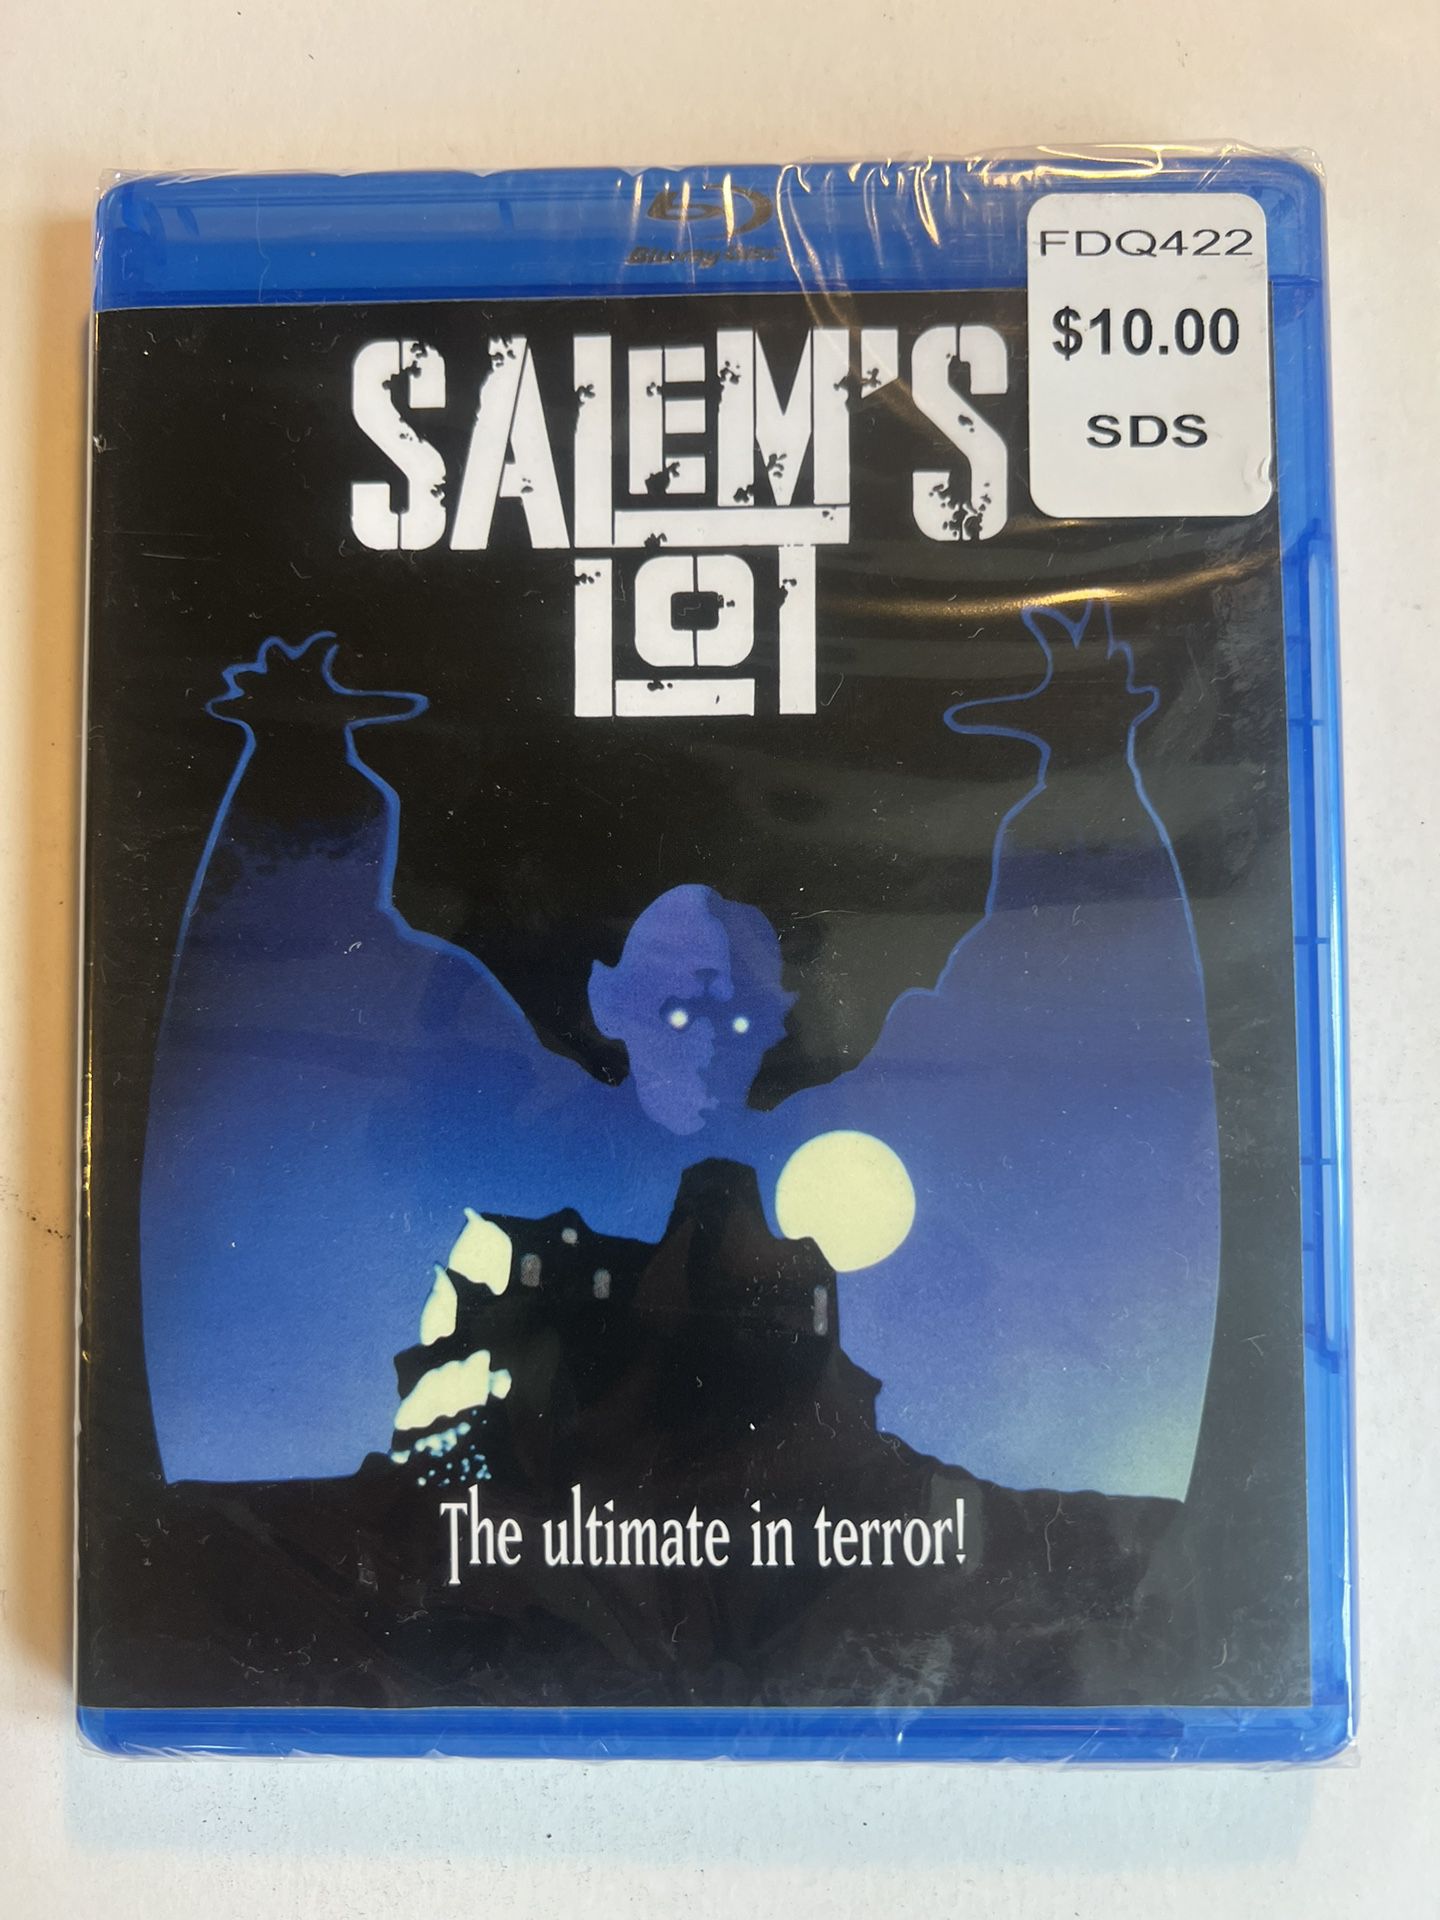 brand new/sealed Salem’s Lot blu ray movie